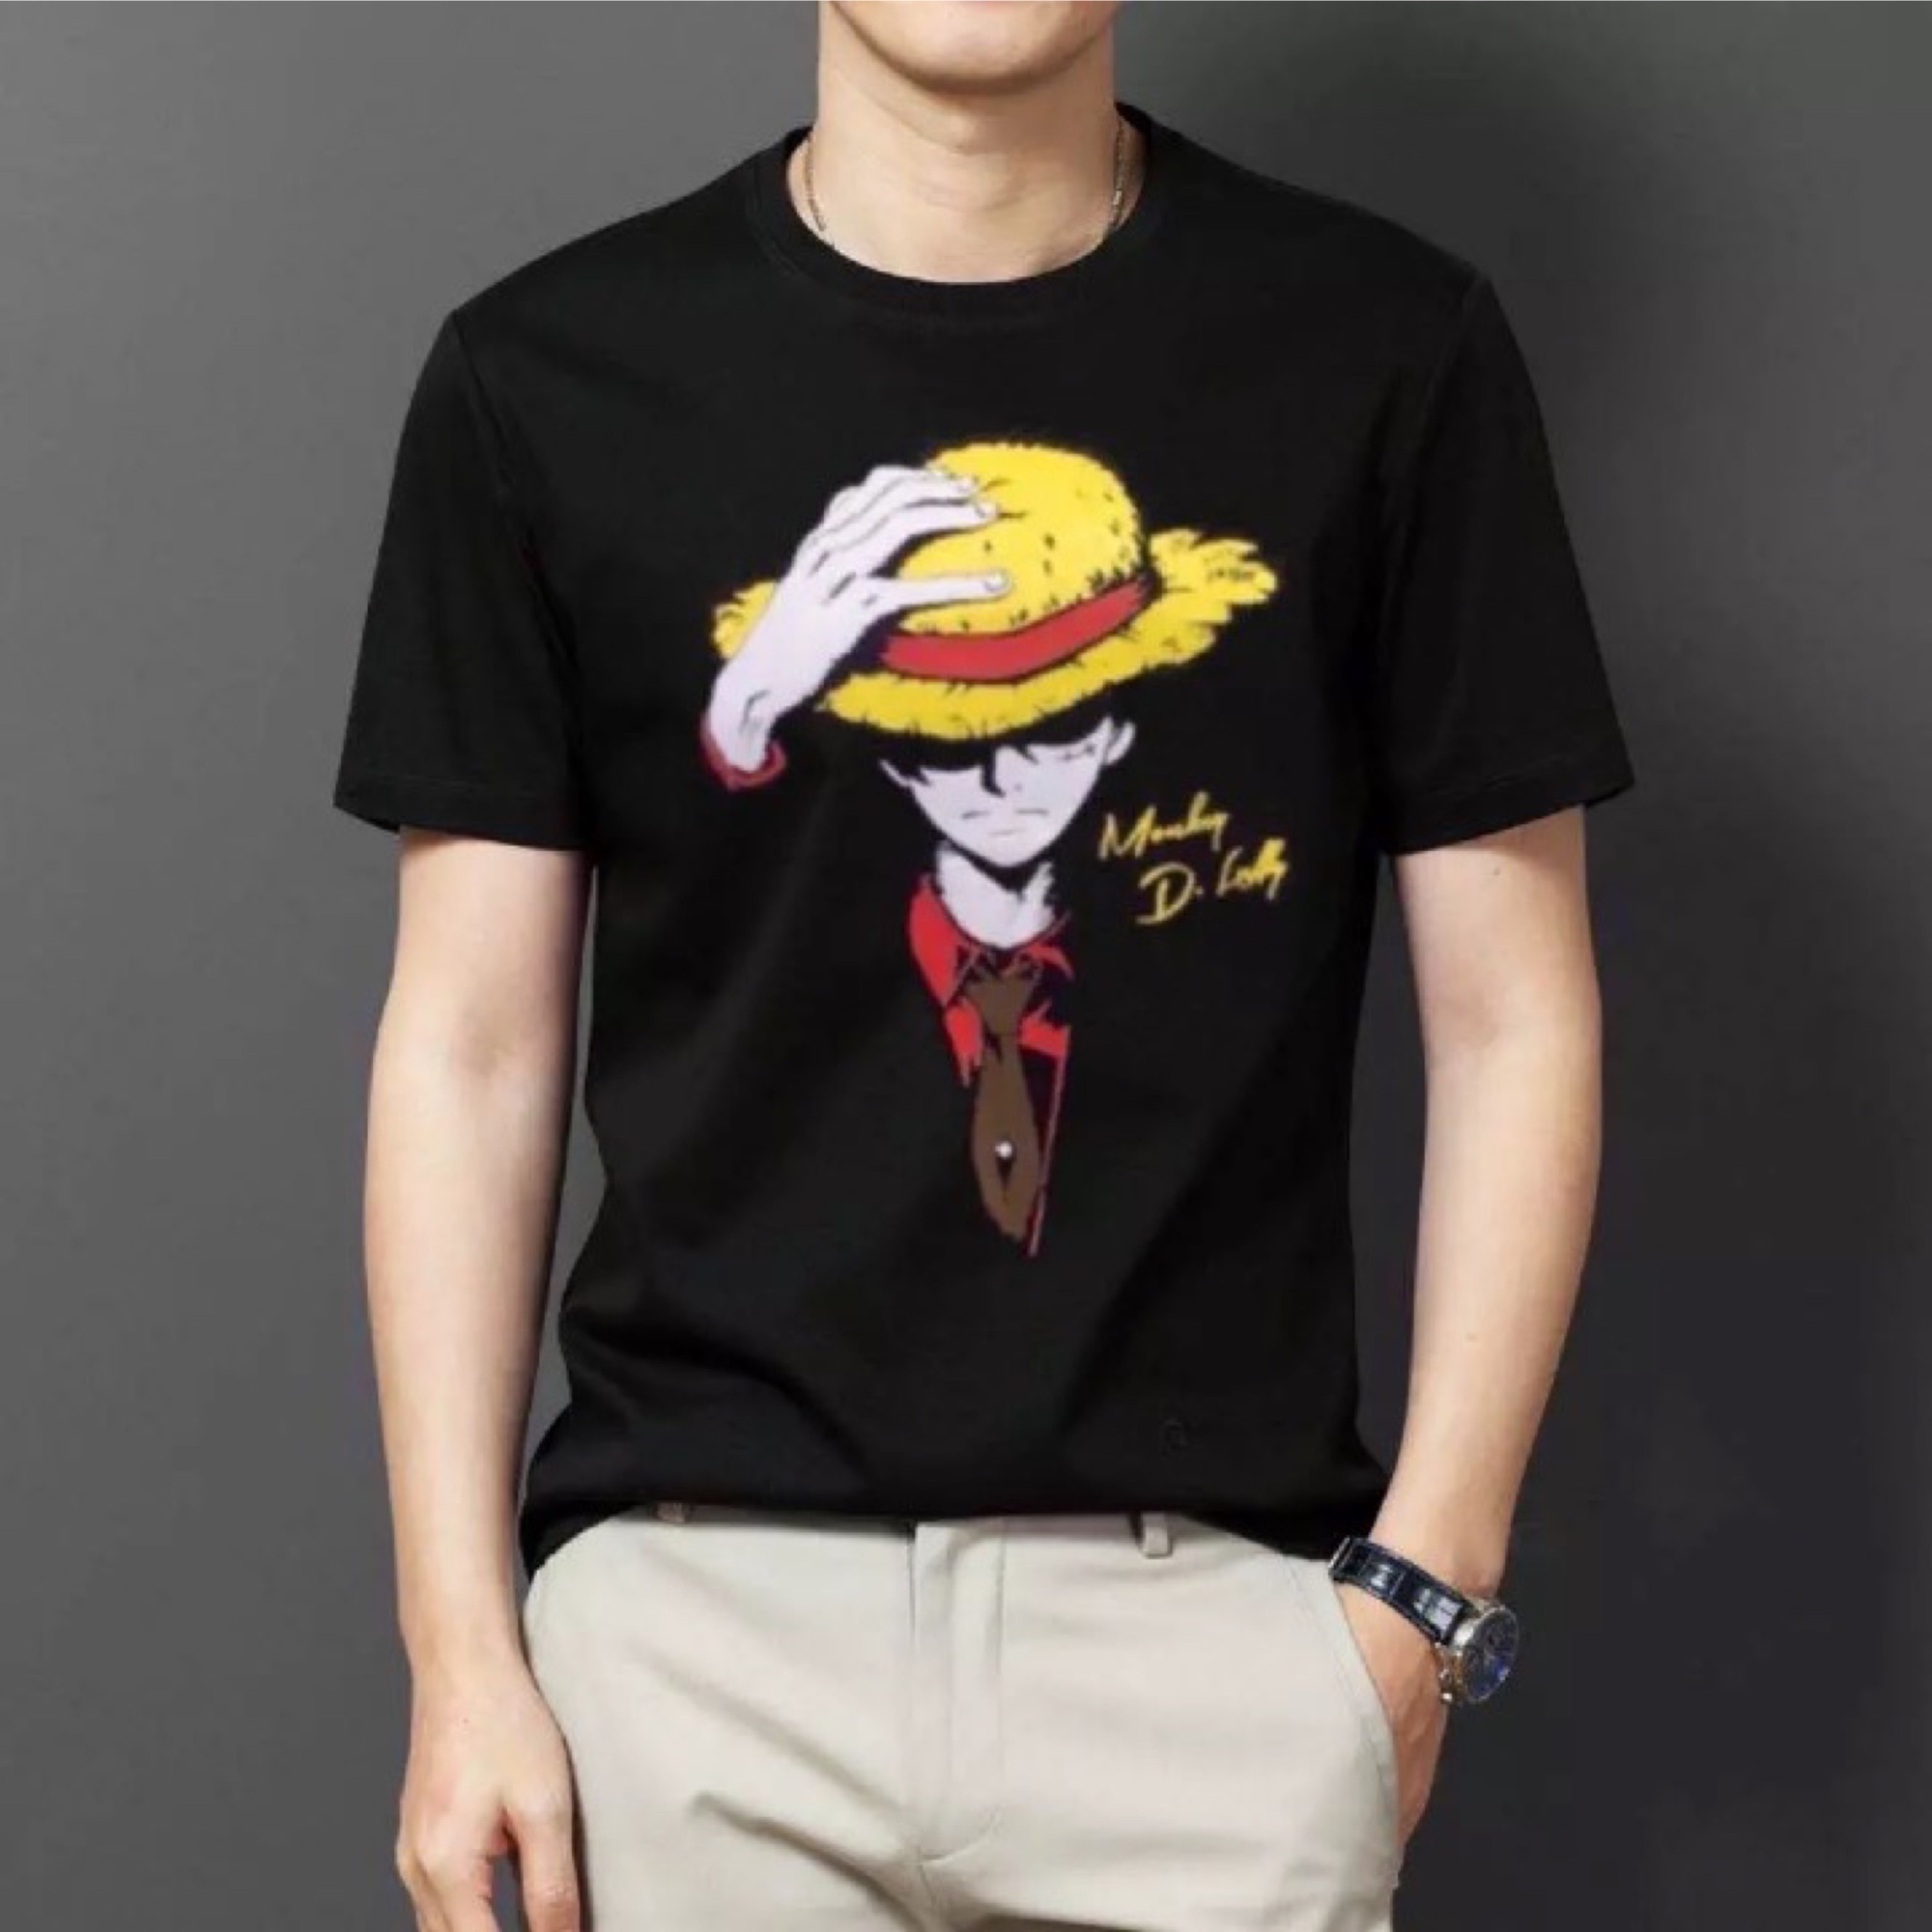 Japanese Animation Shirt Oboro Muramasa Shirt DIY Custom Tshirt Sleeve  Modal Shirt Anime Shirts Summer Anime T-Shirt Athletic Shirt Modal Tee Shirt  Top (White,S) : Amazon.com.au: Clothing, Shoes & Accessories